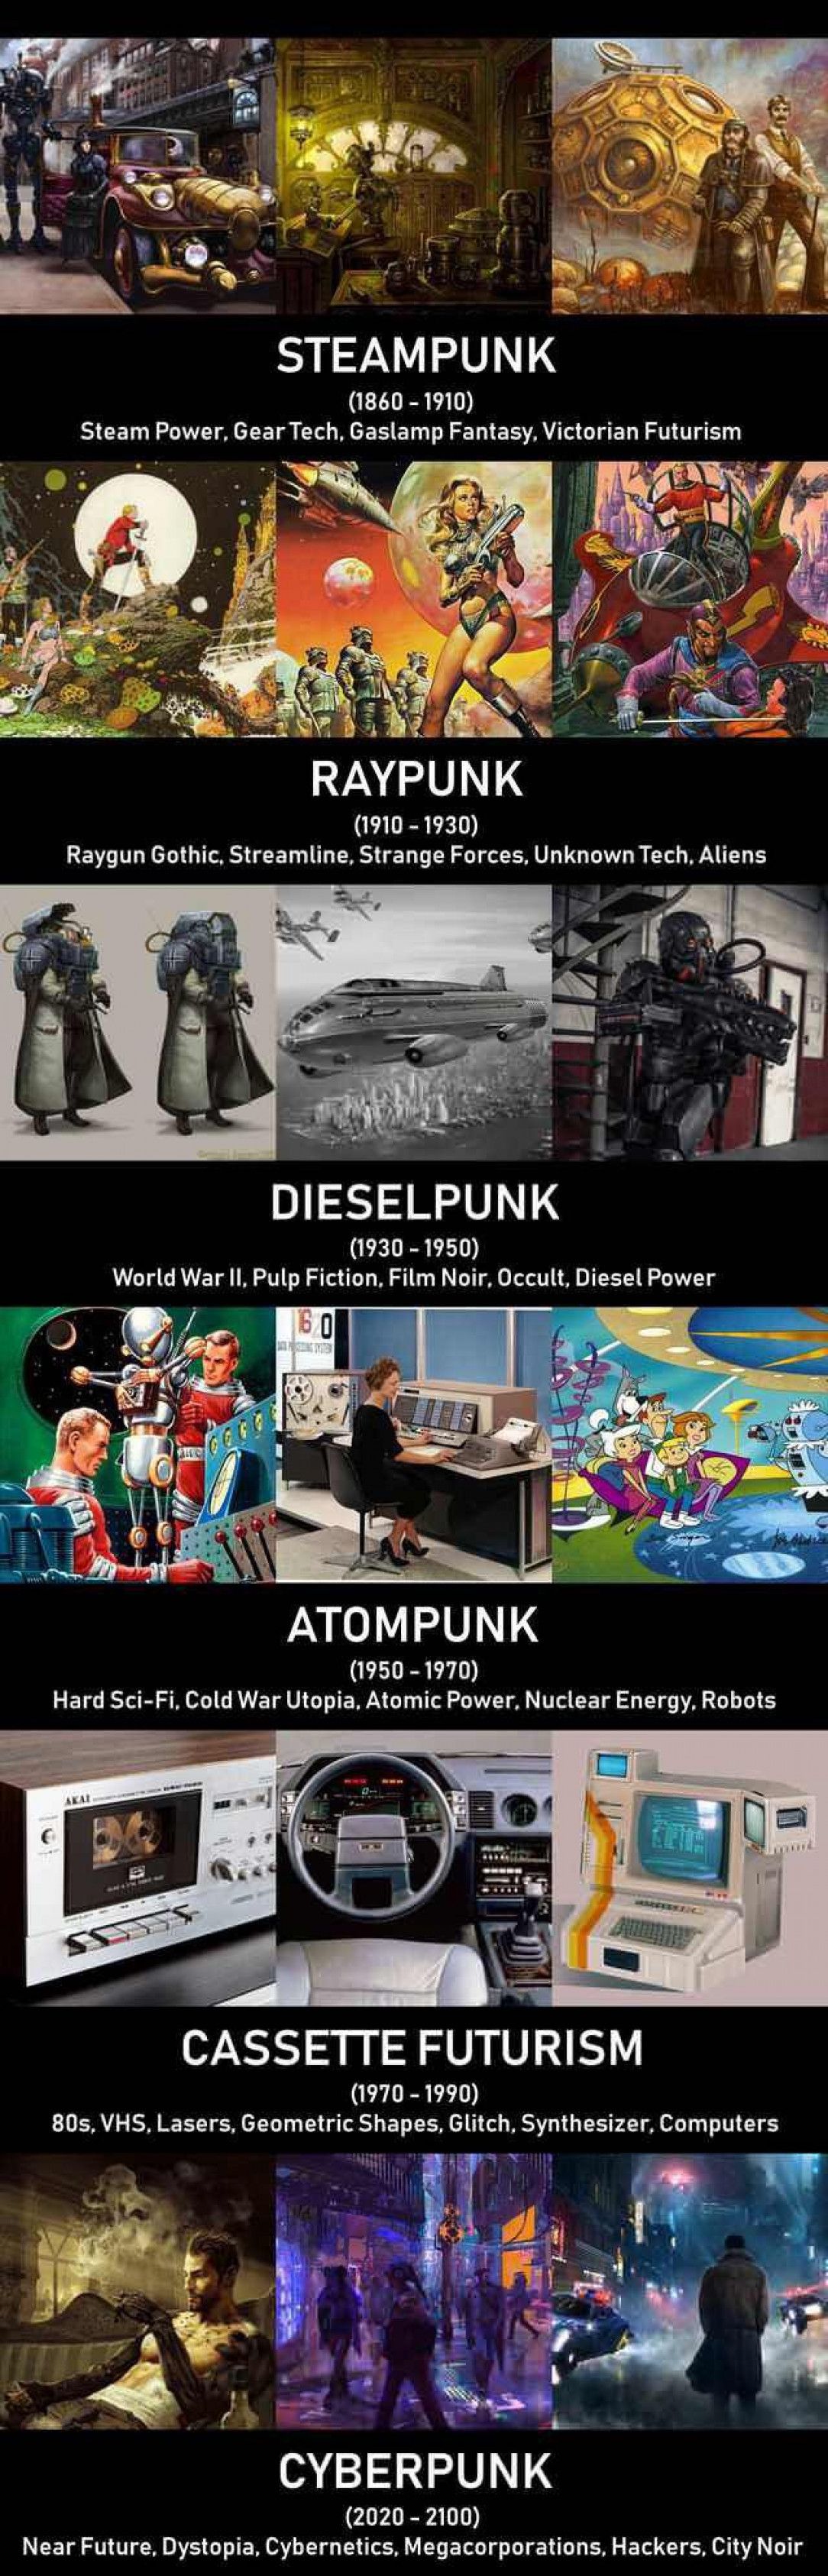 Sub genres of cyberpunk